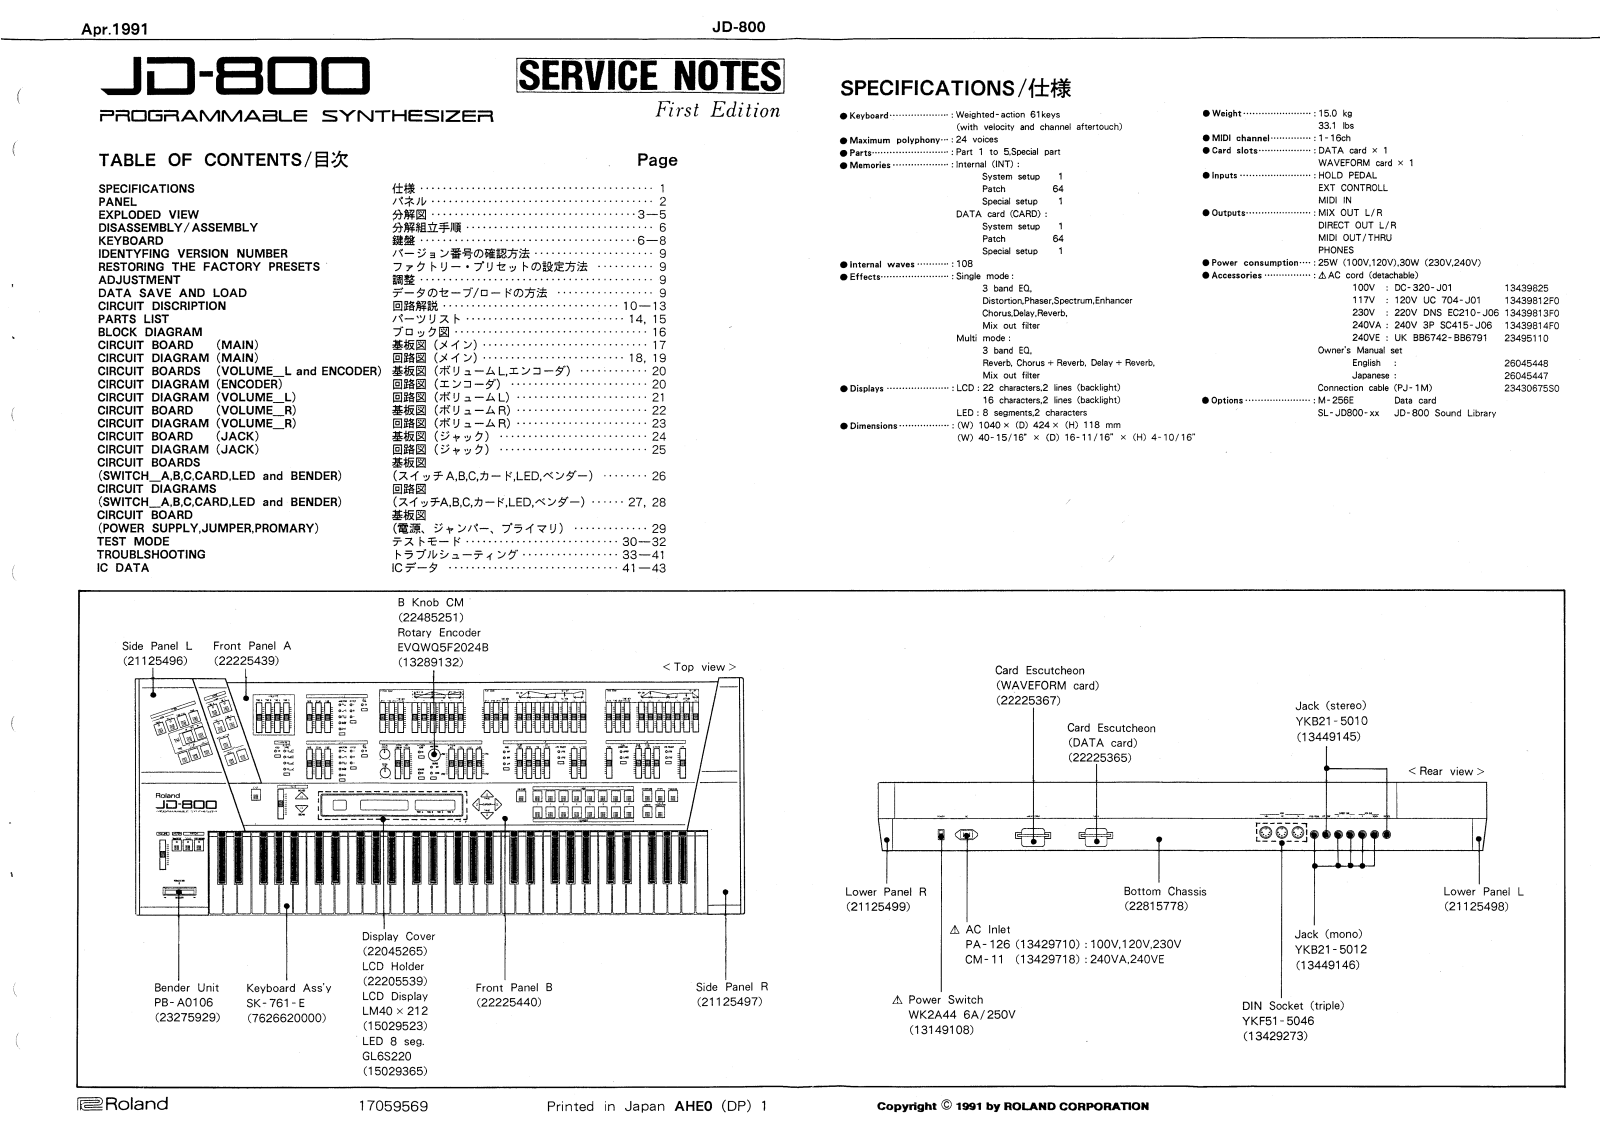 Roland JD-800 Service Manual